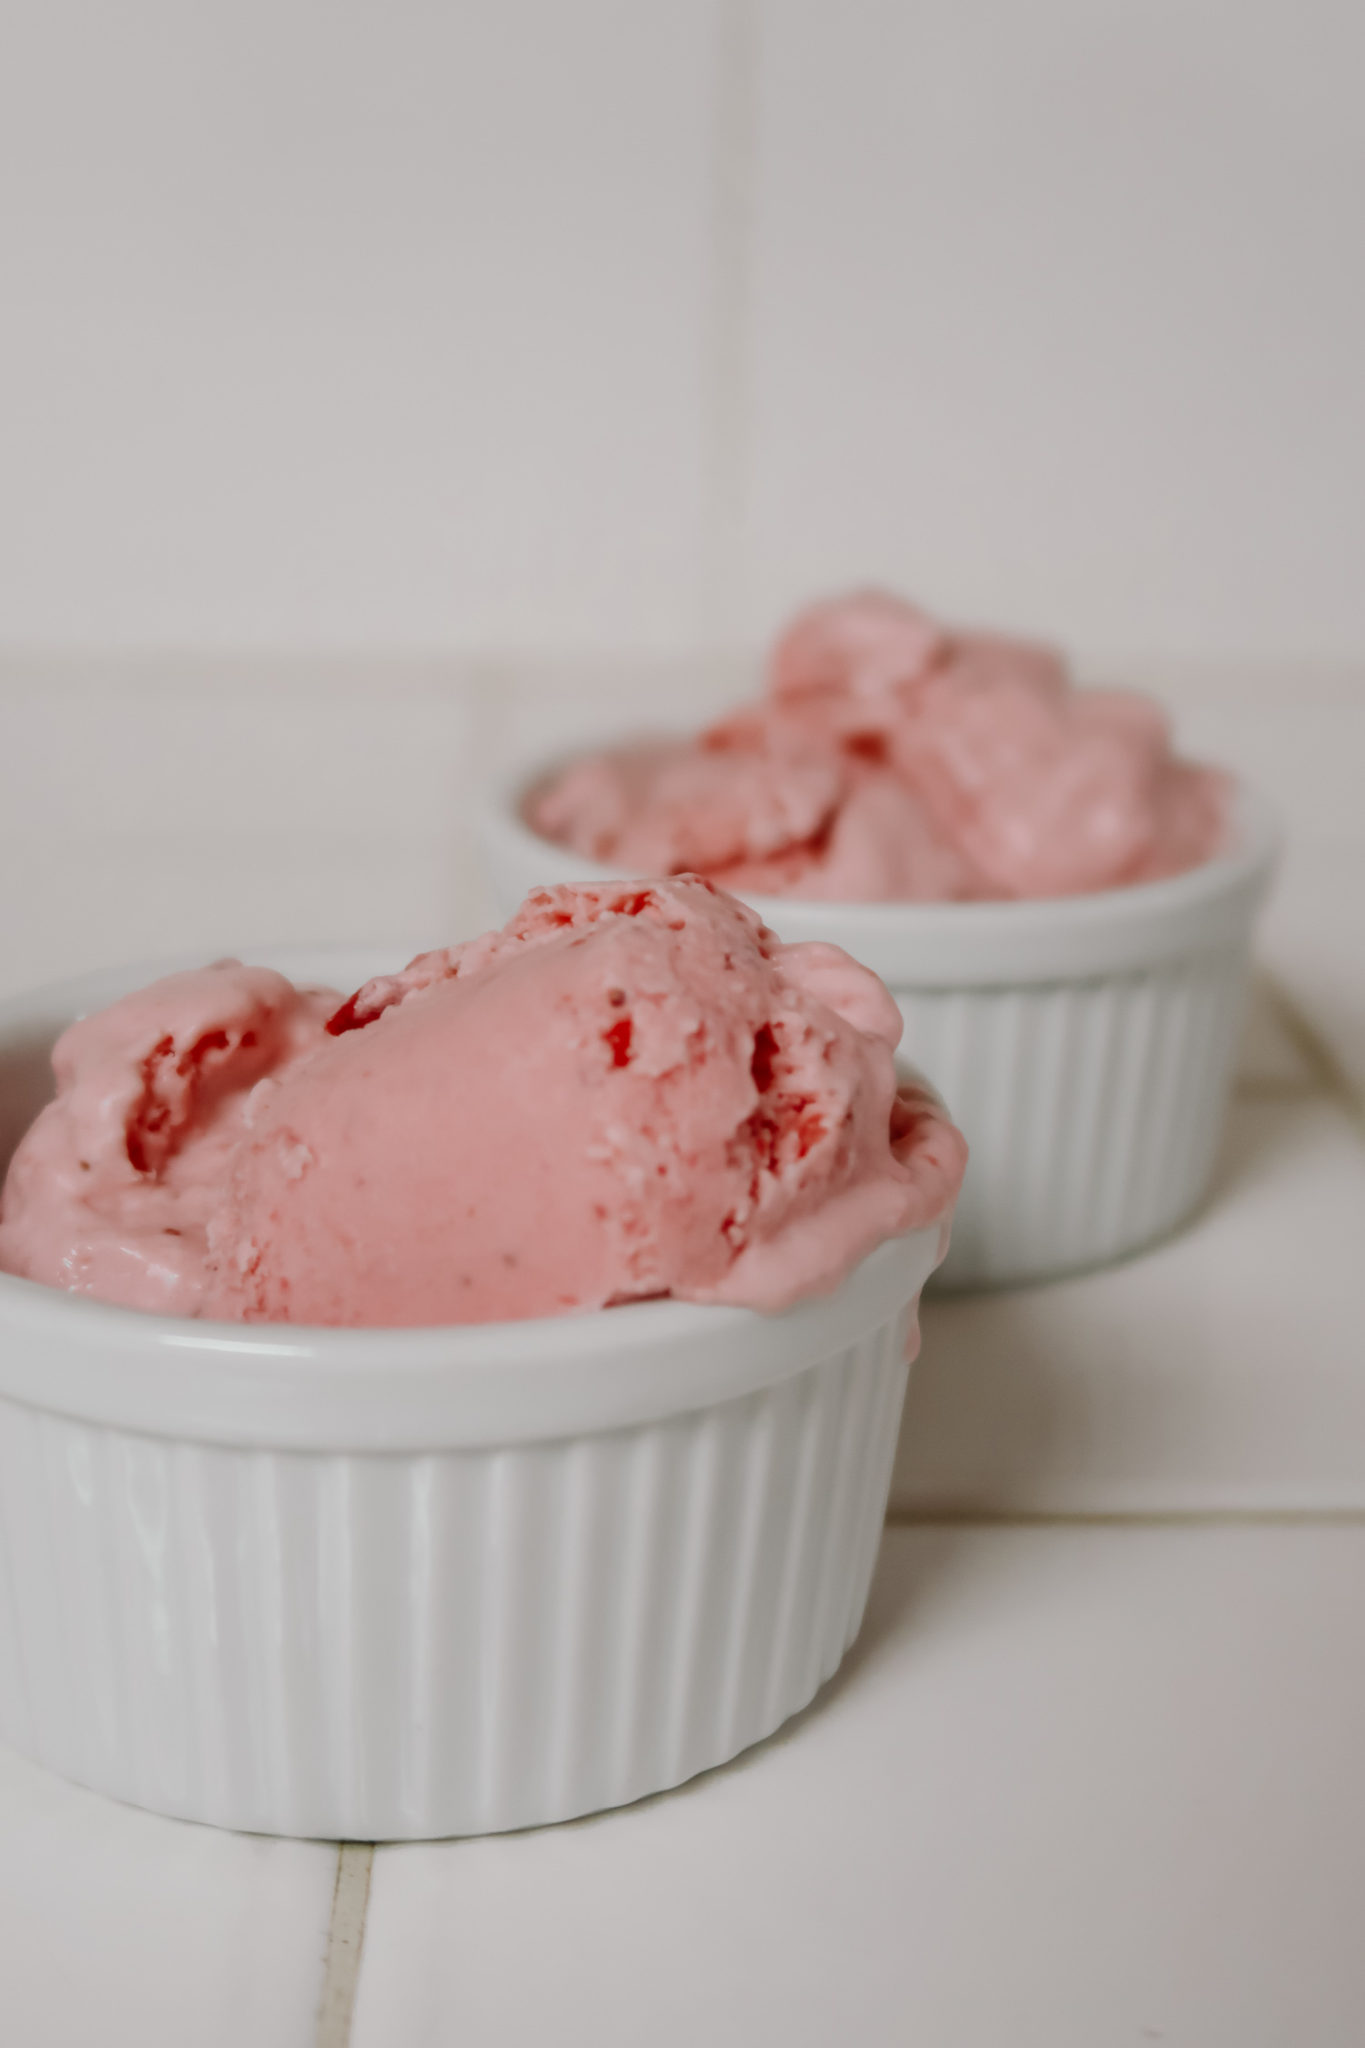 3 Ingredients Homemade Strawberry Ice Cream Recipe